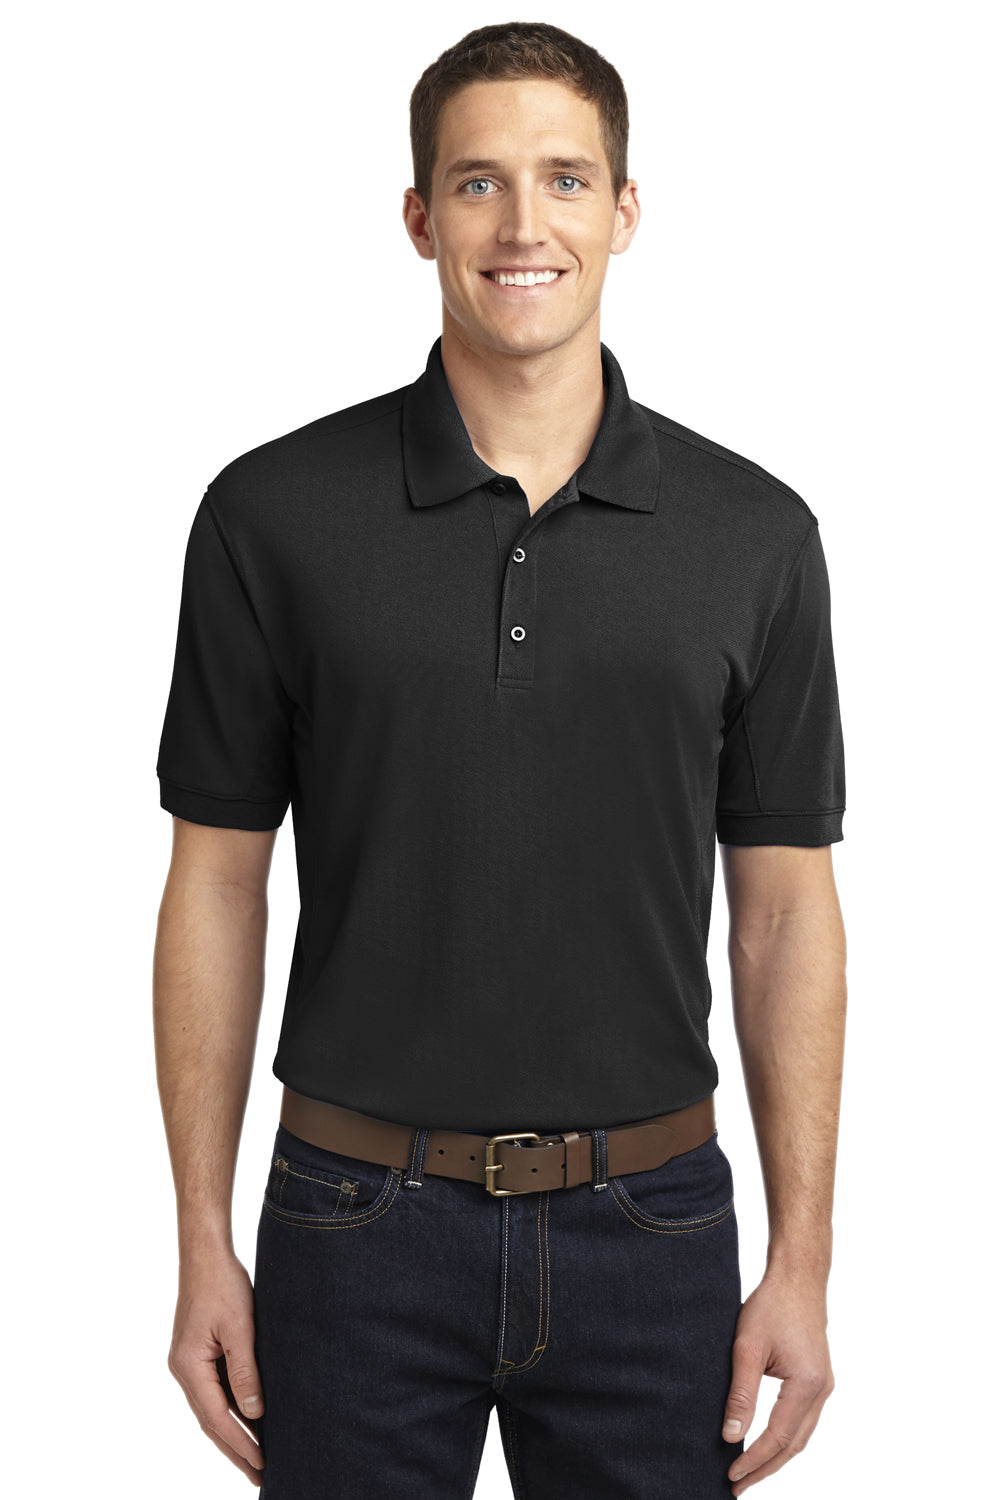 Port Authority K567 Mens 5-1 Performance Moisture Wicking Short Sleeve Polo Shirt Black Front